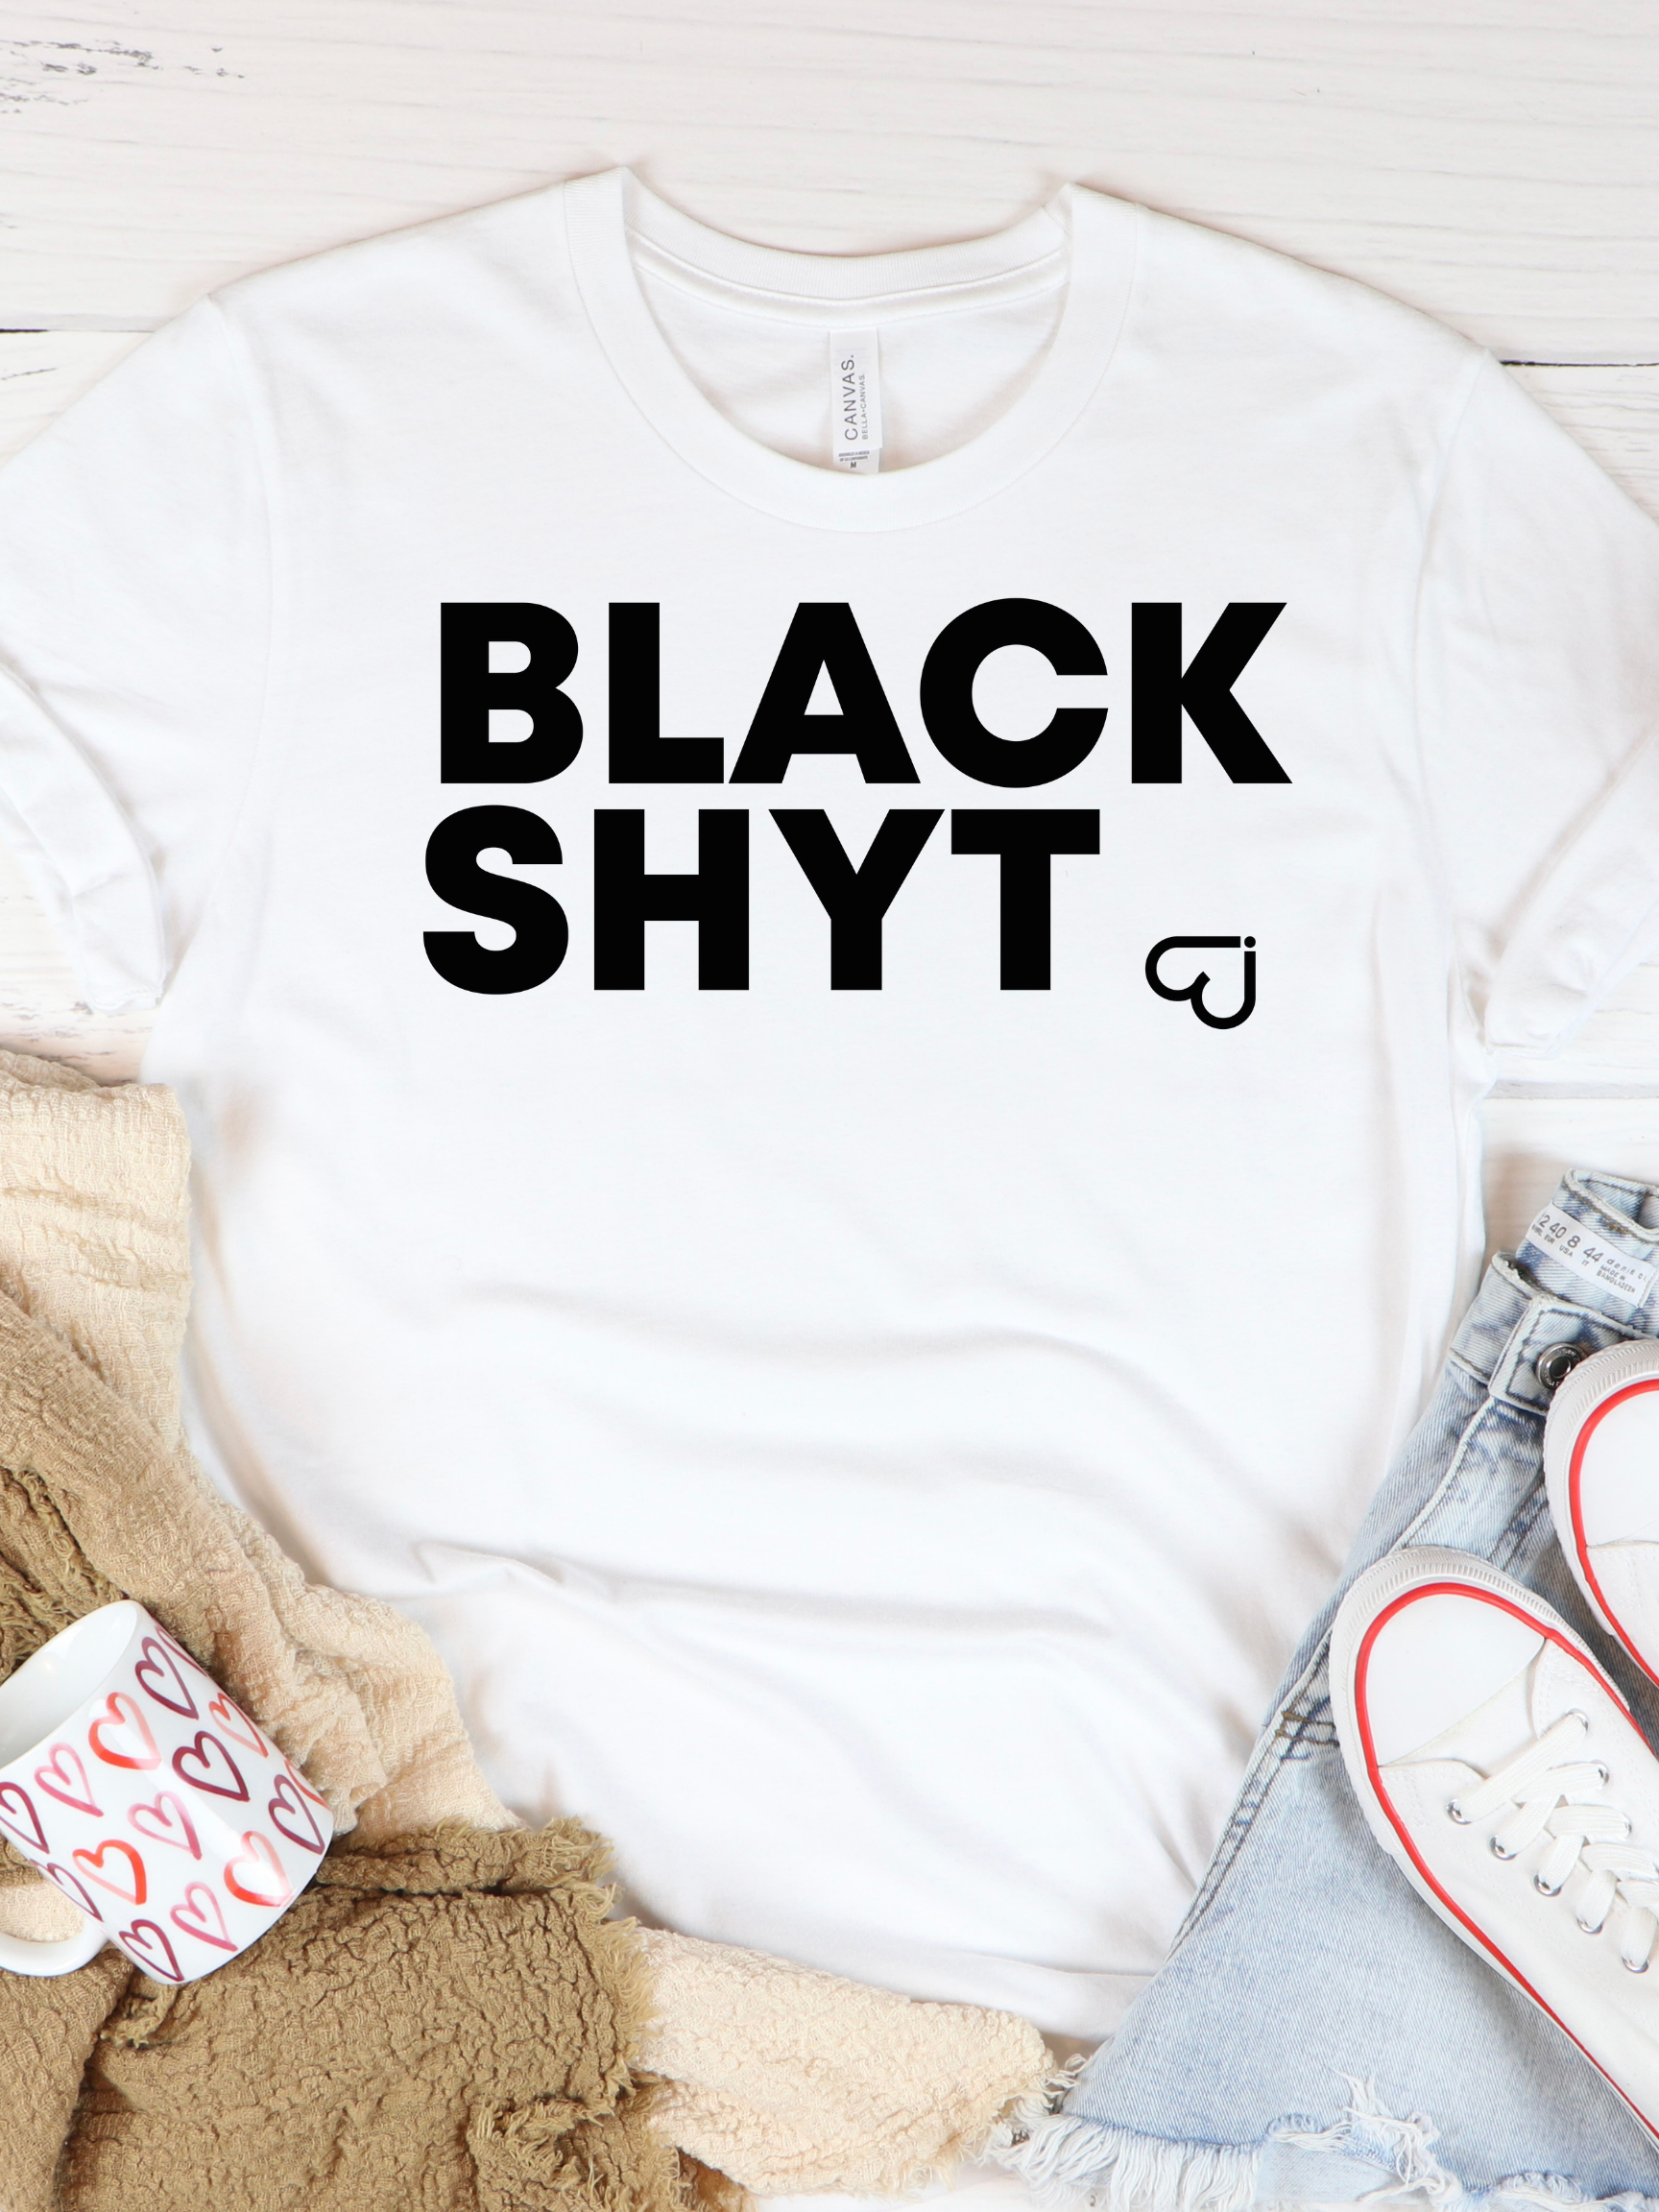 BLACK SHYT T-SHIRT